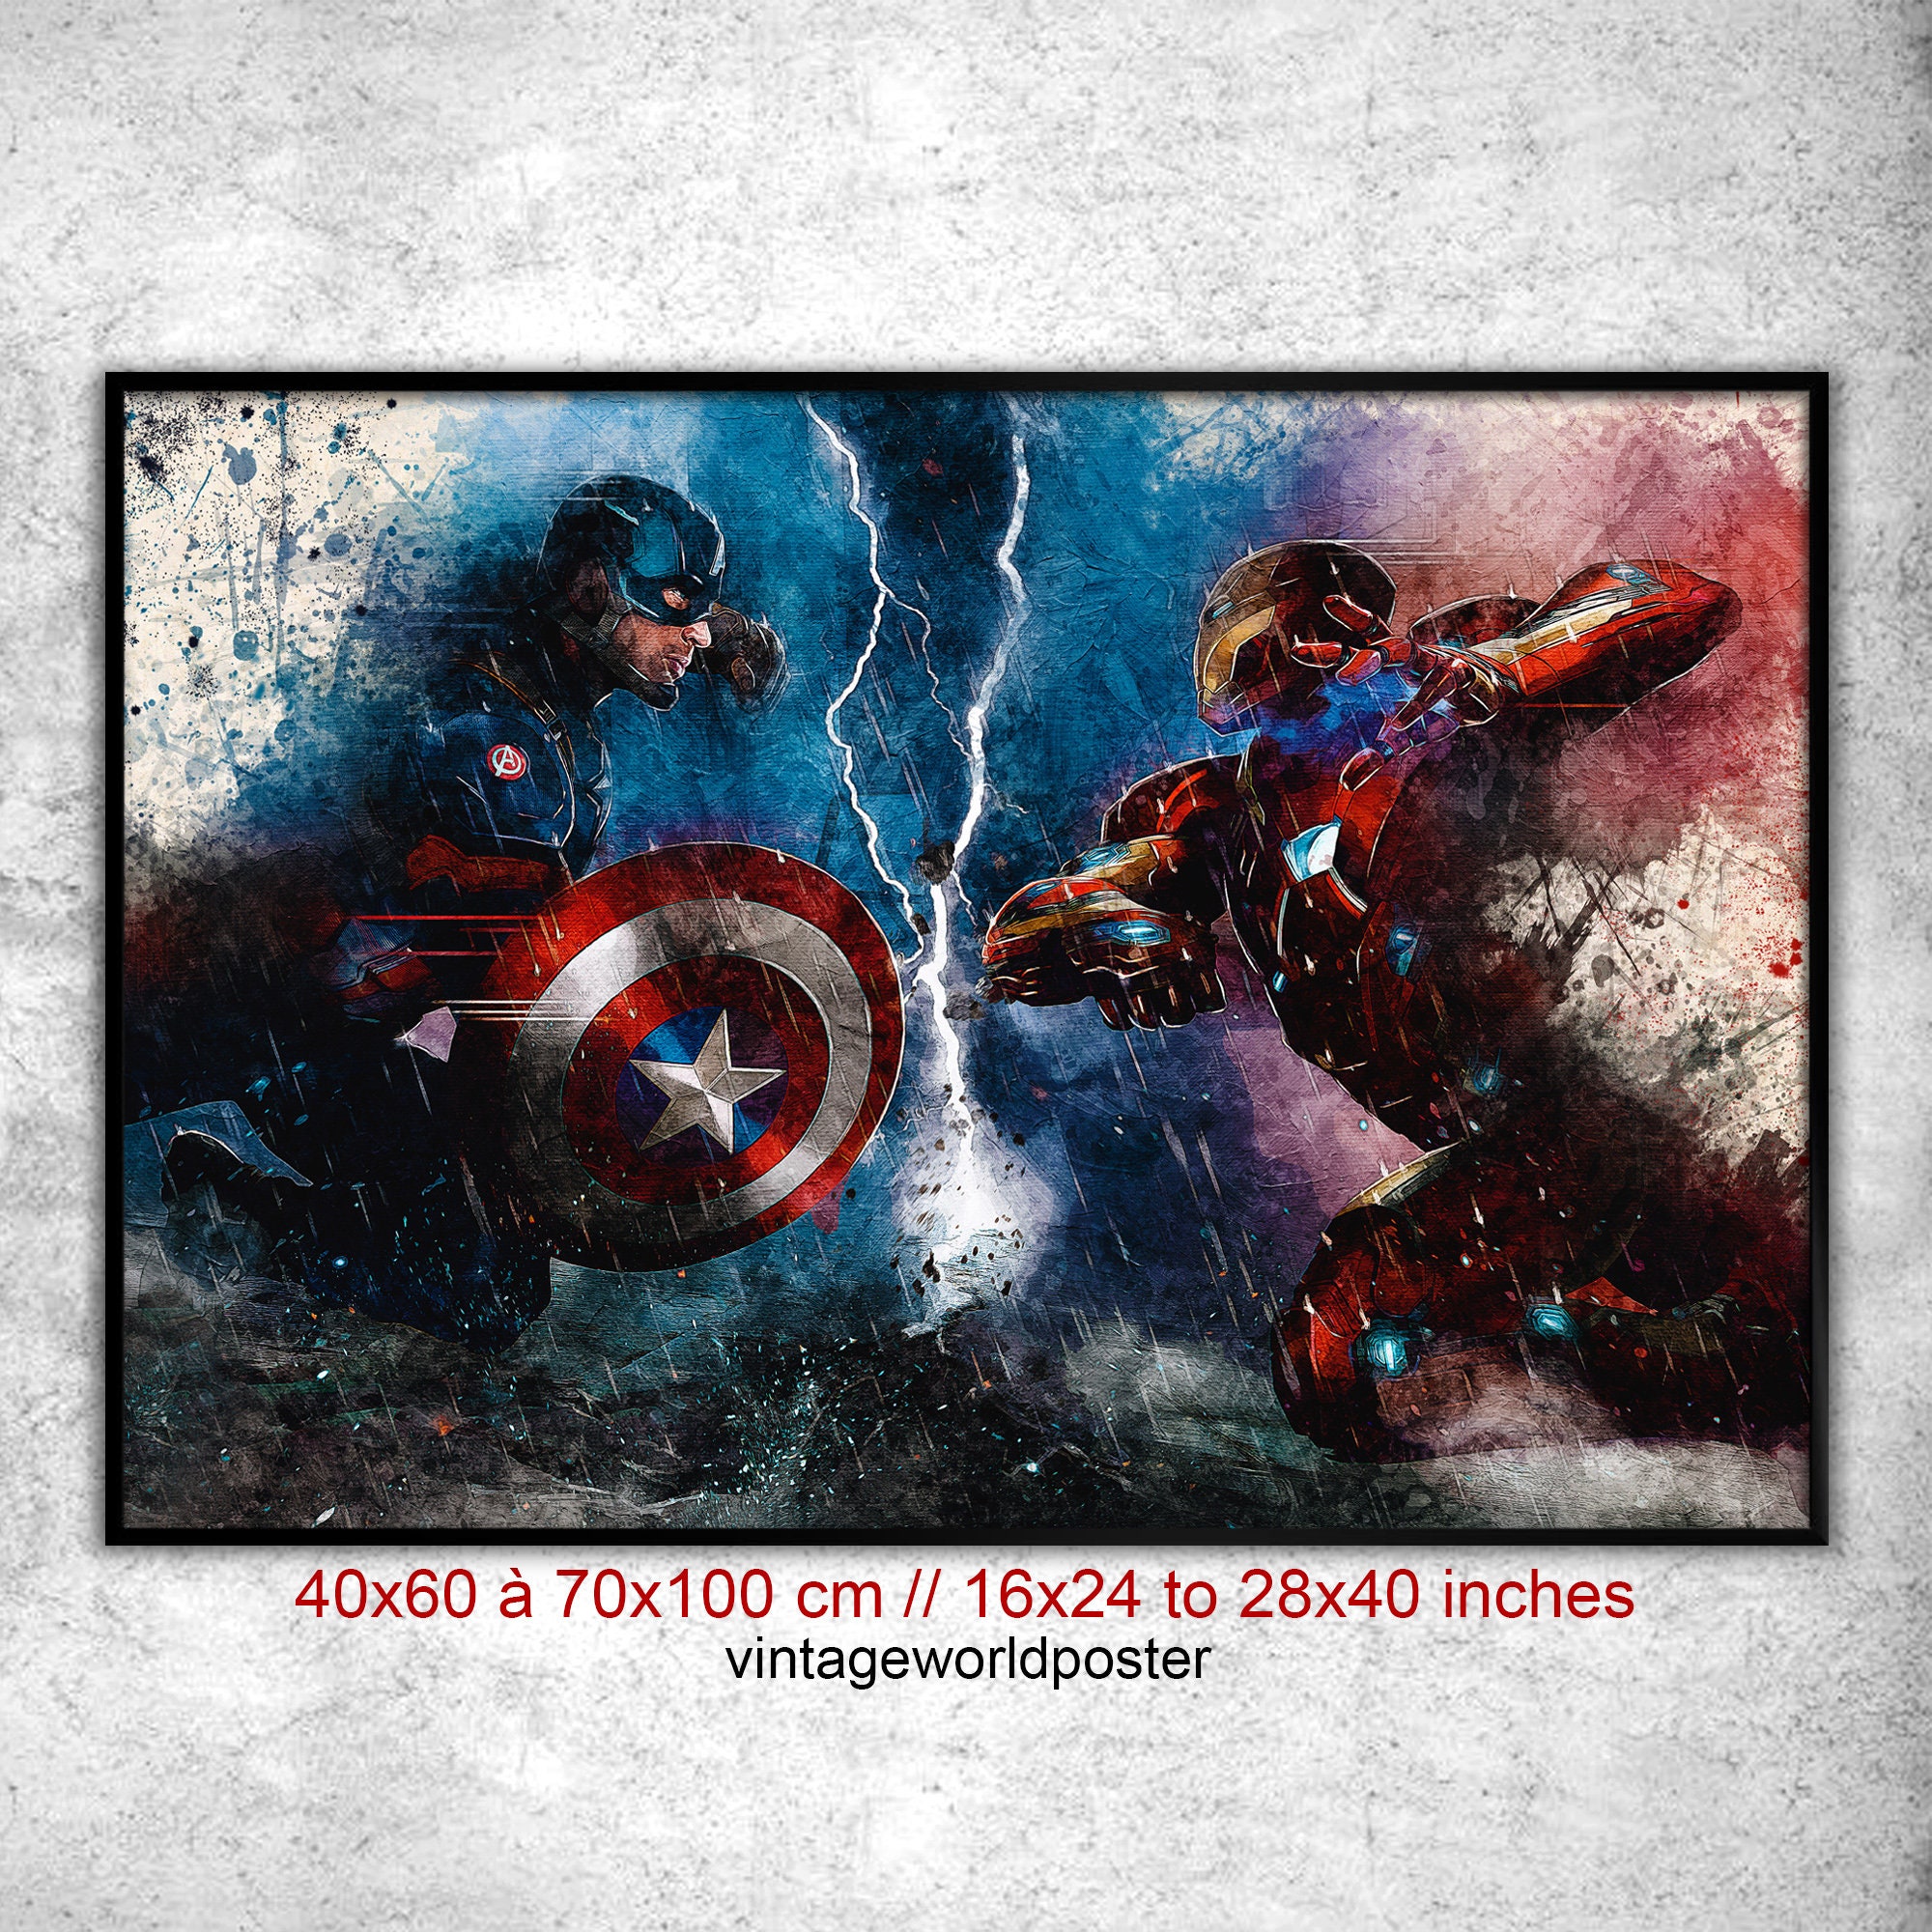 Avengers 6 Fan Poster Imagines Iron Man & Captain America's MCU Return